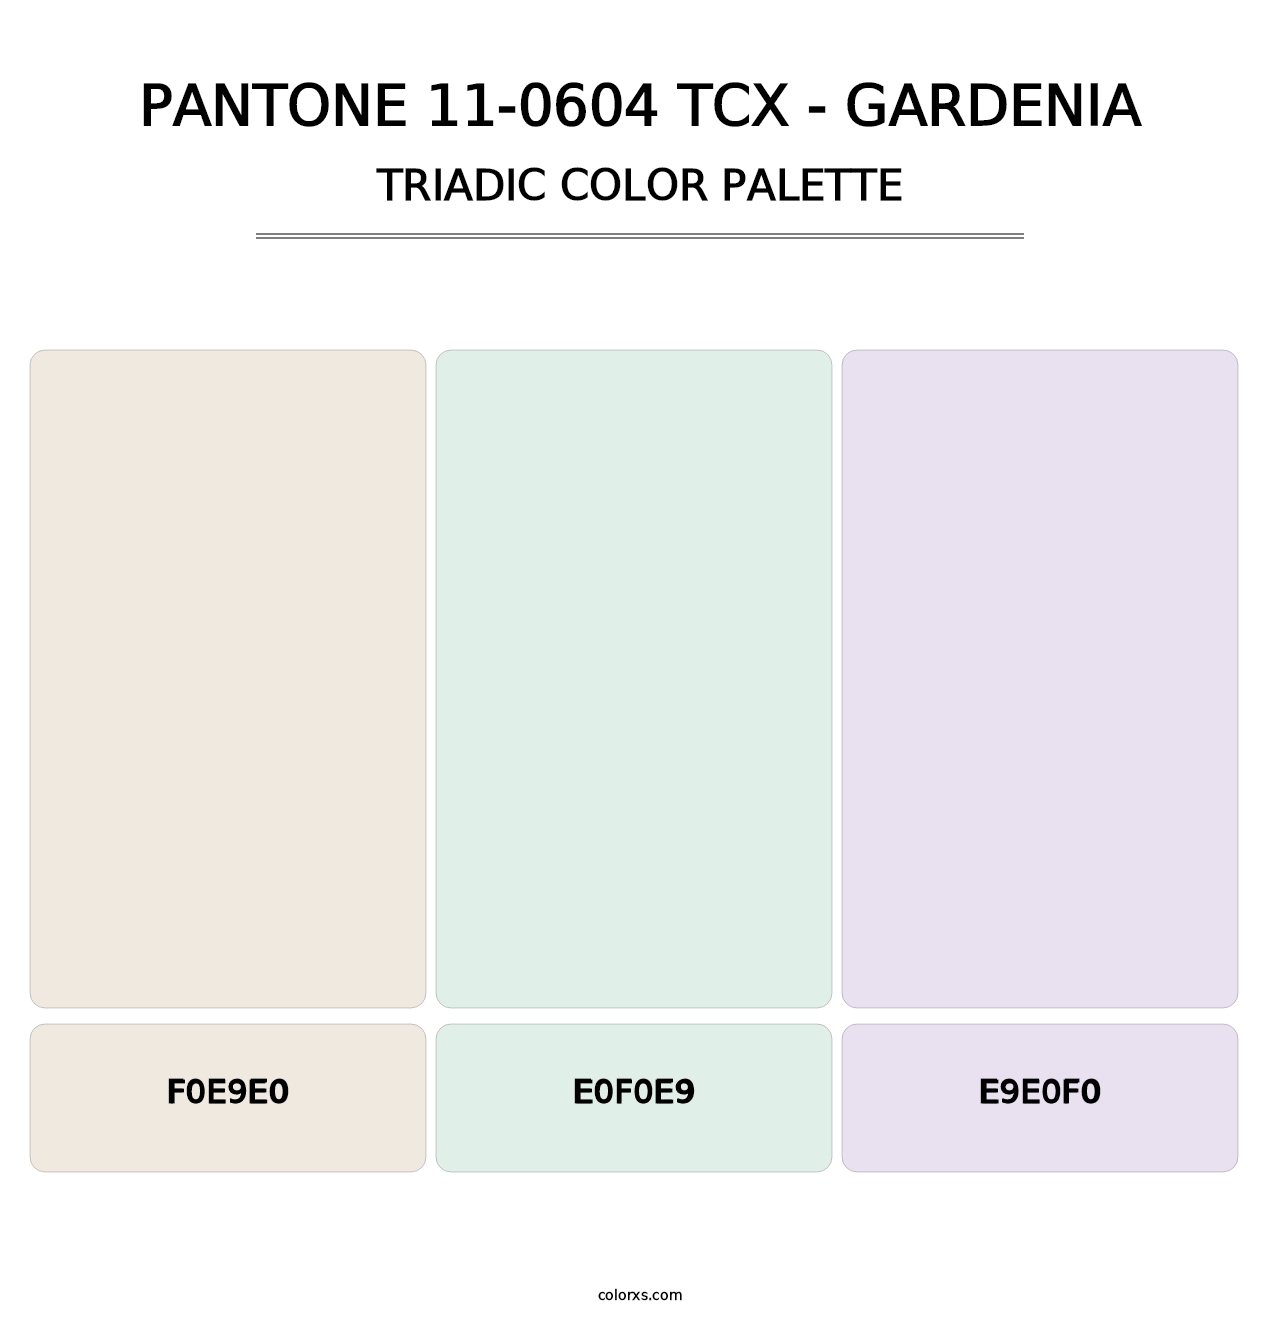 PANTONE 11-0604 TCX - Gardenia - Triadic Color Palette